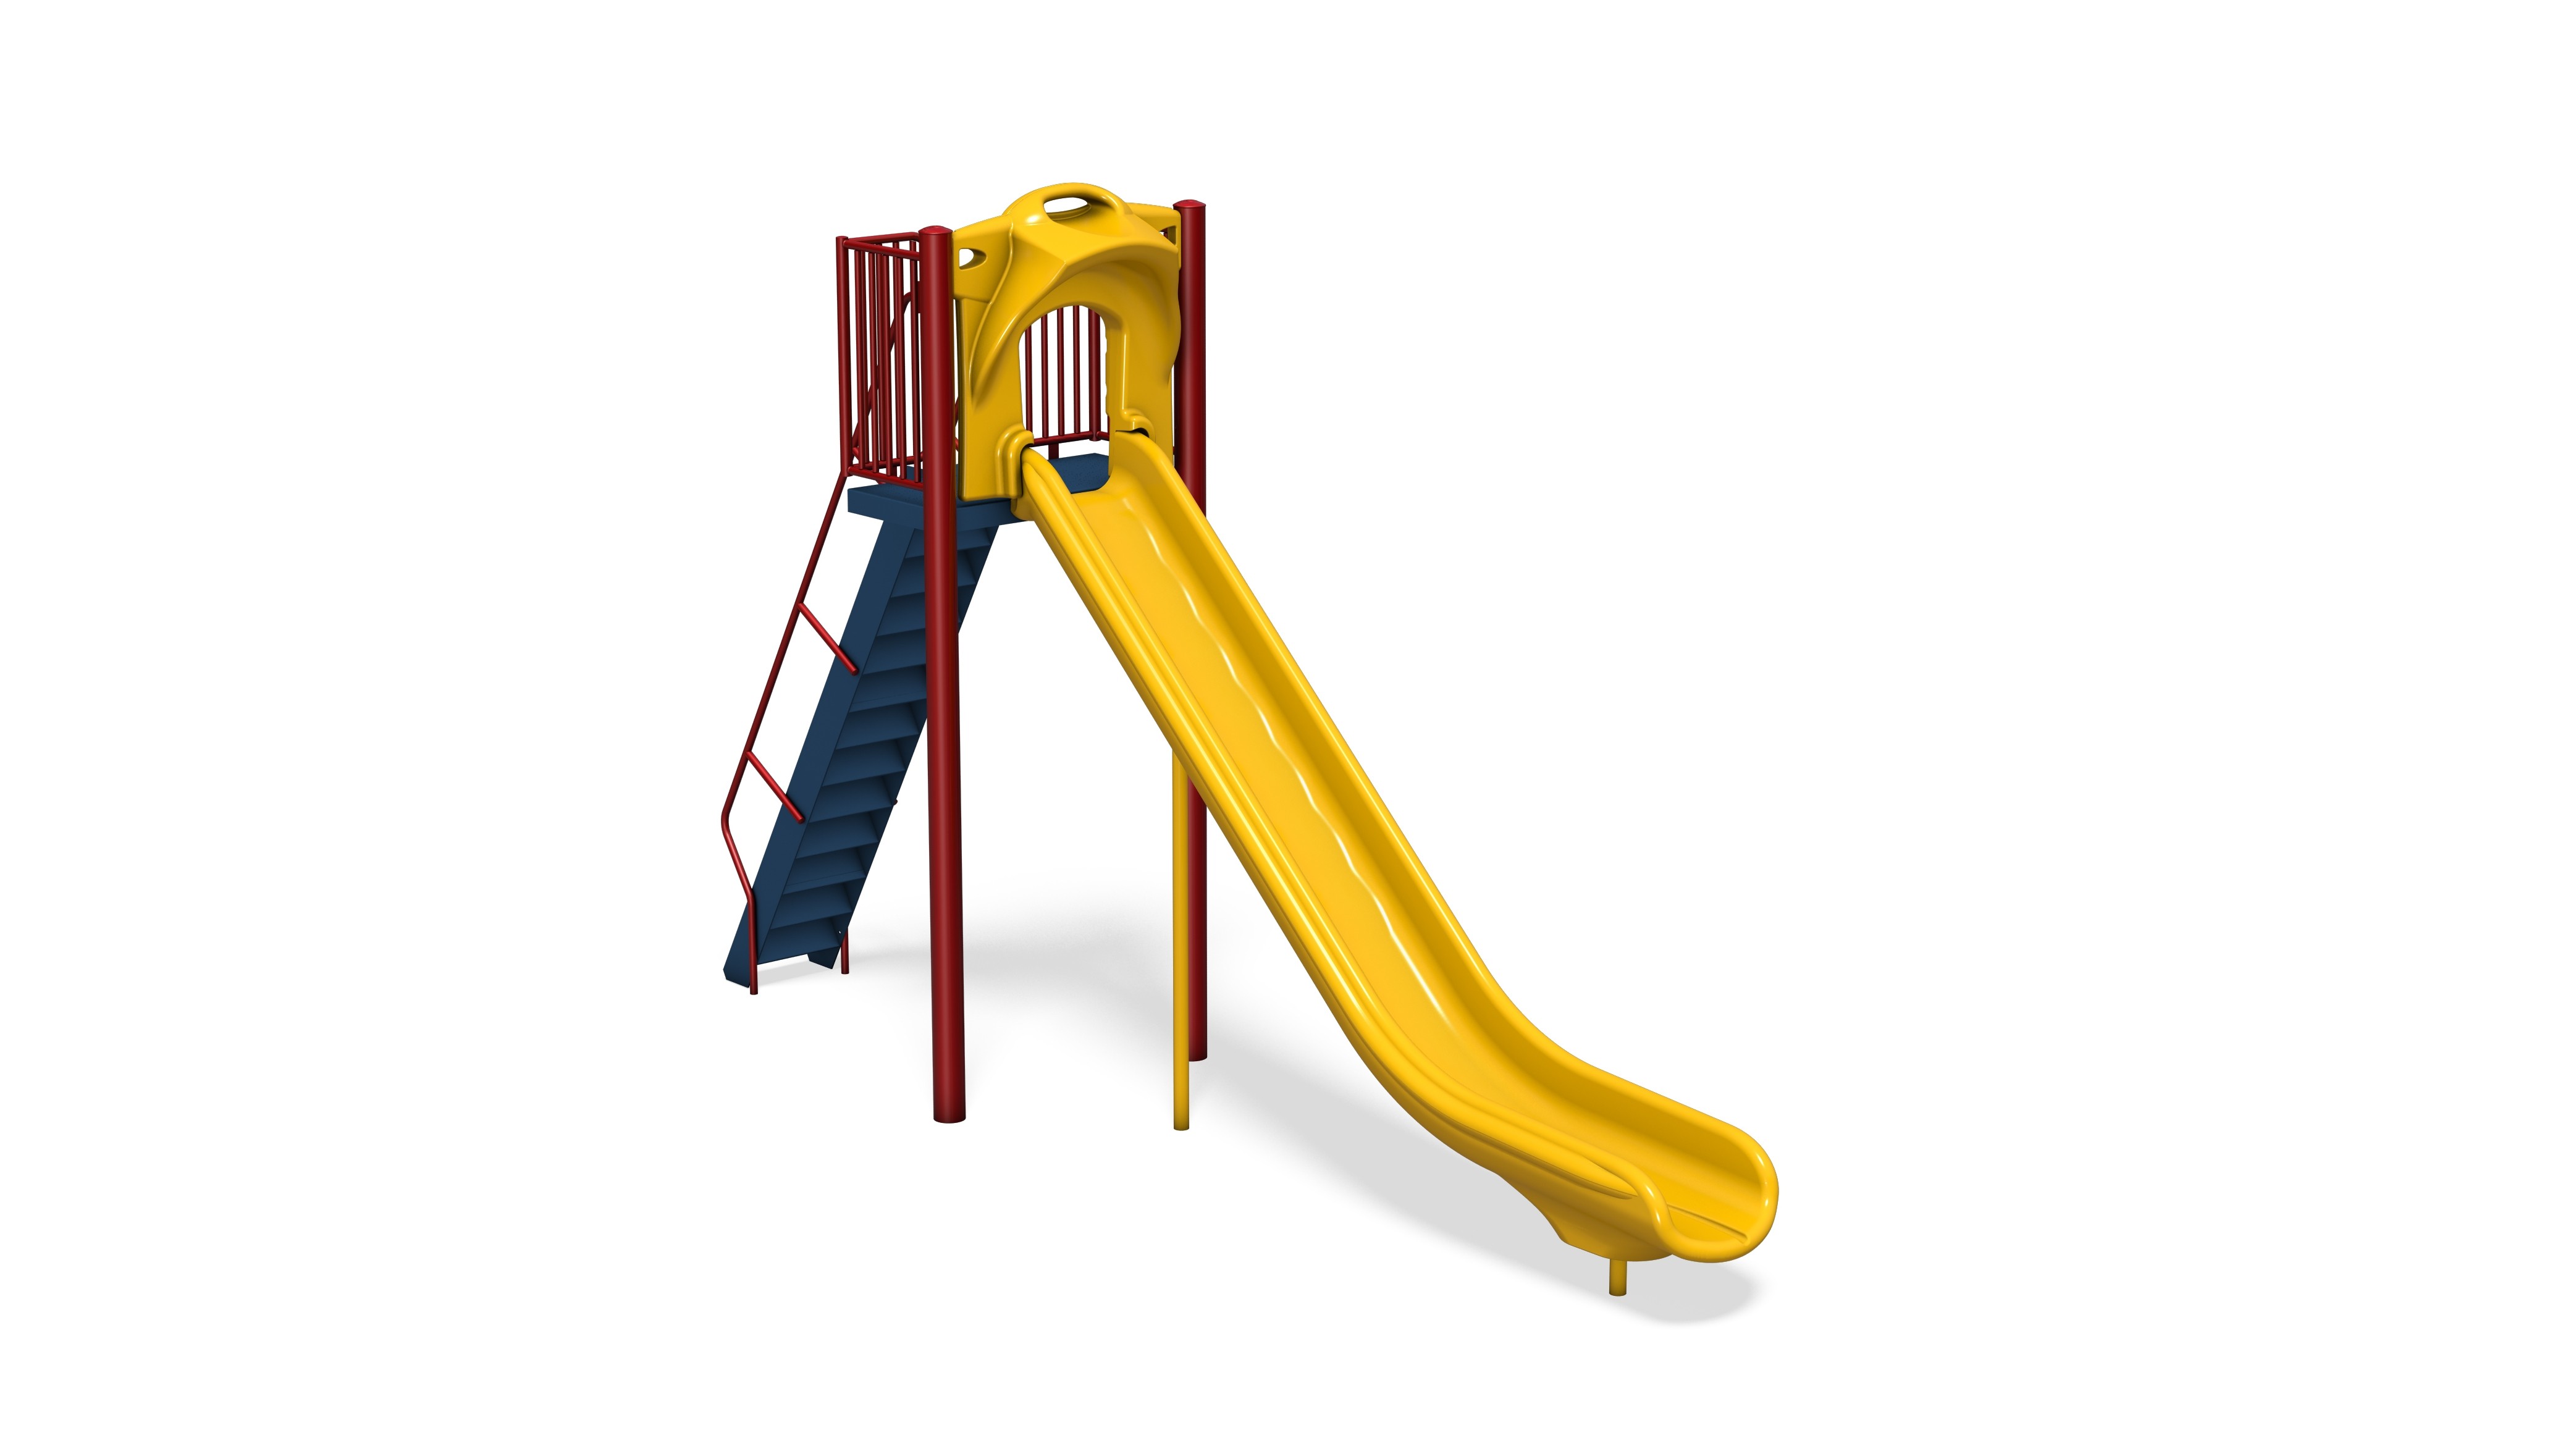 81738 - Zip Slide | Playground Slides | Playground Equipment | GameTime